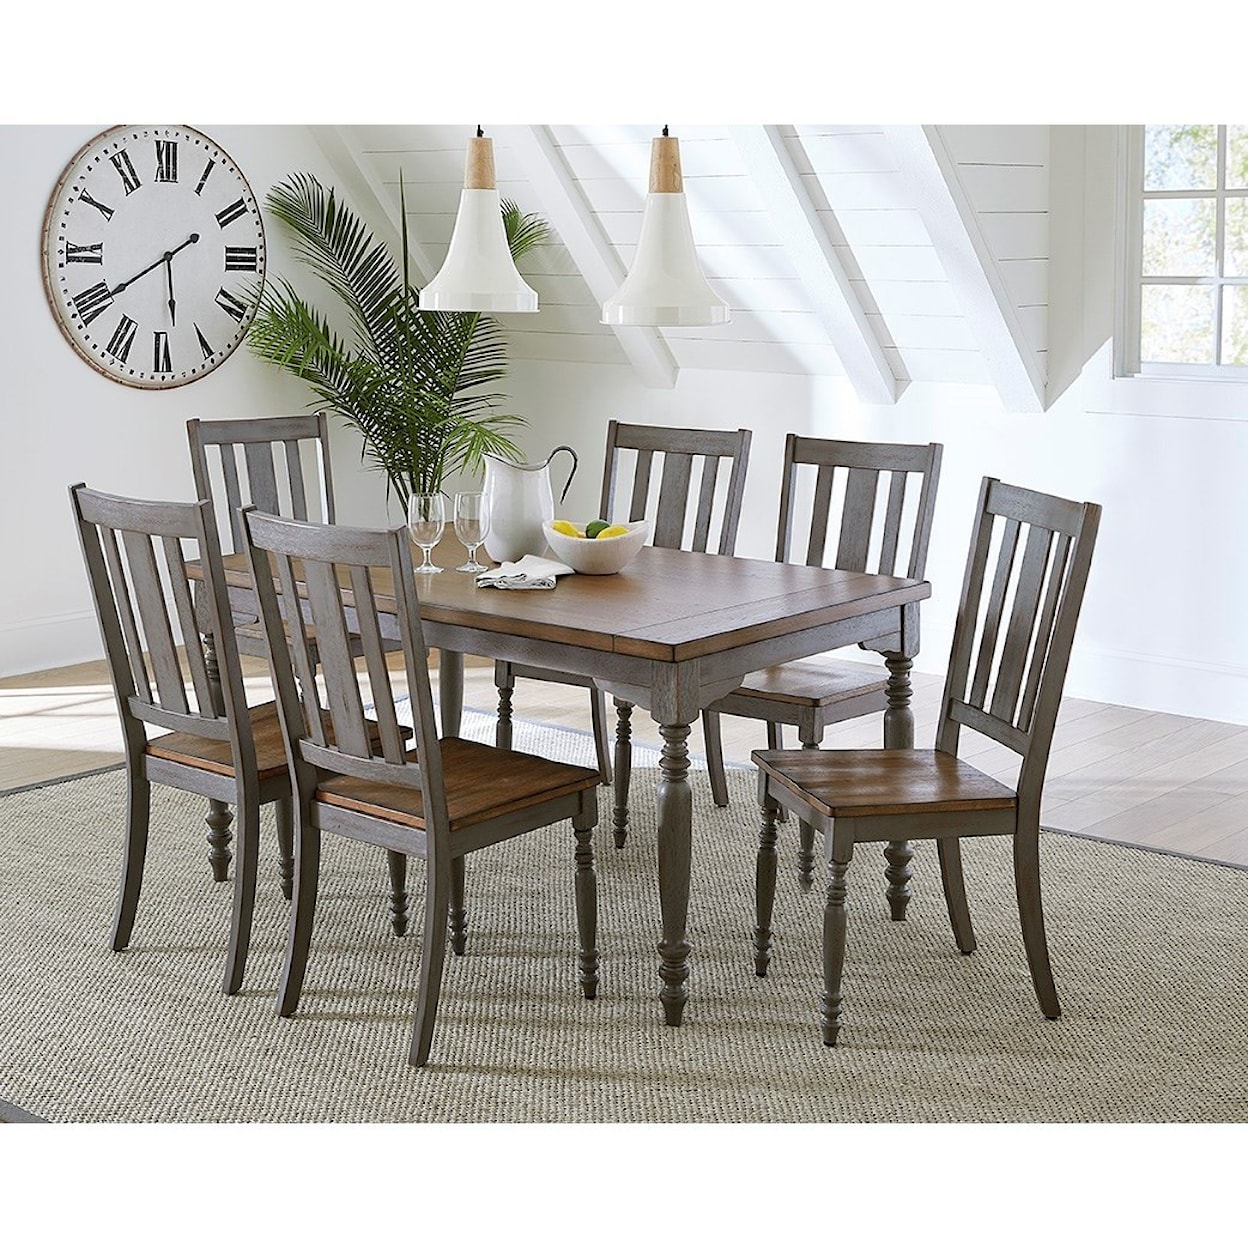 Progressive Furniture Midori 7-Piece Table and Chair Set